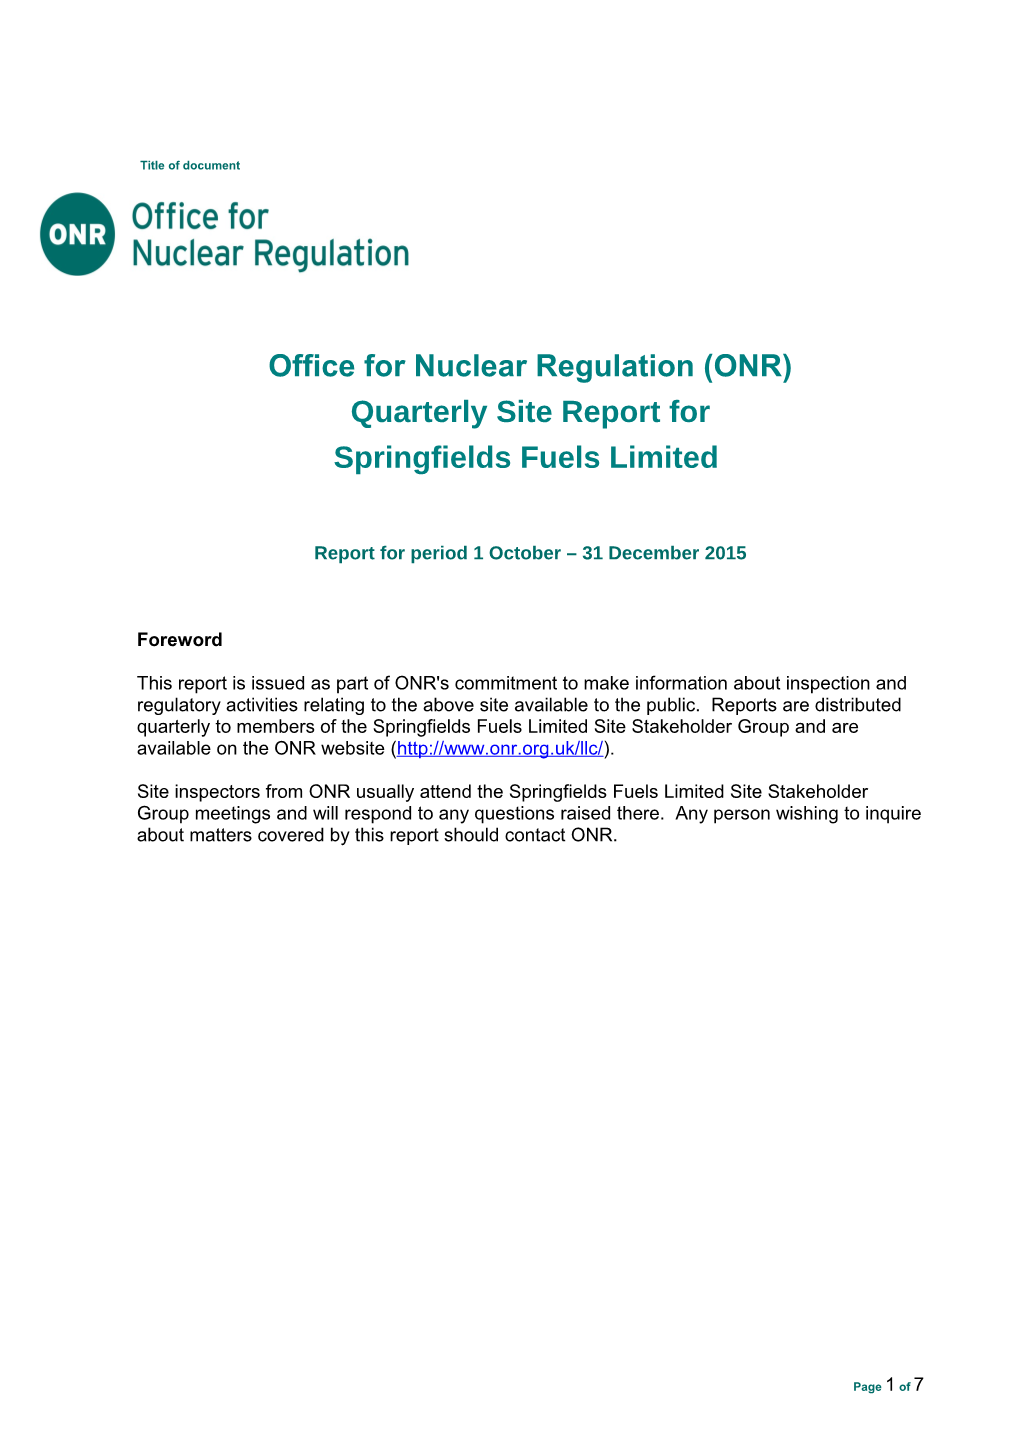 Quarterly Site Report for Springfields Fuels Limited 2015 Quarter 4